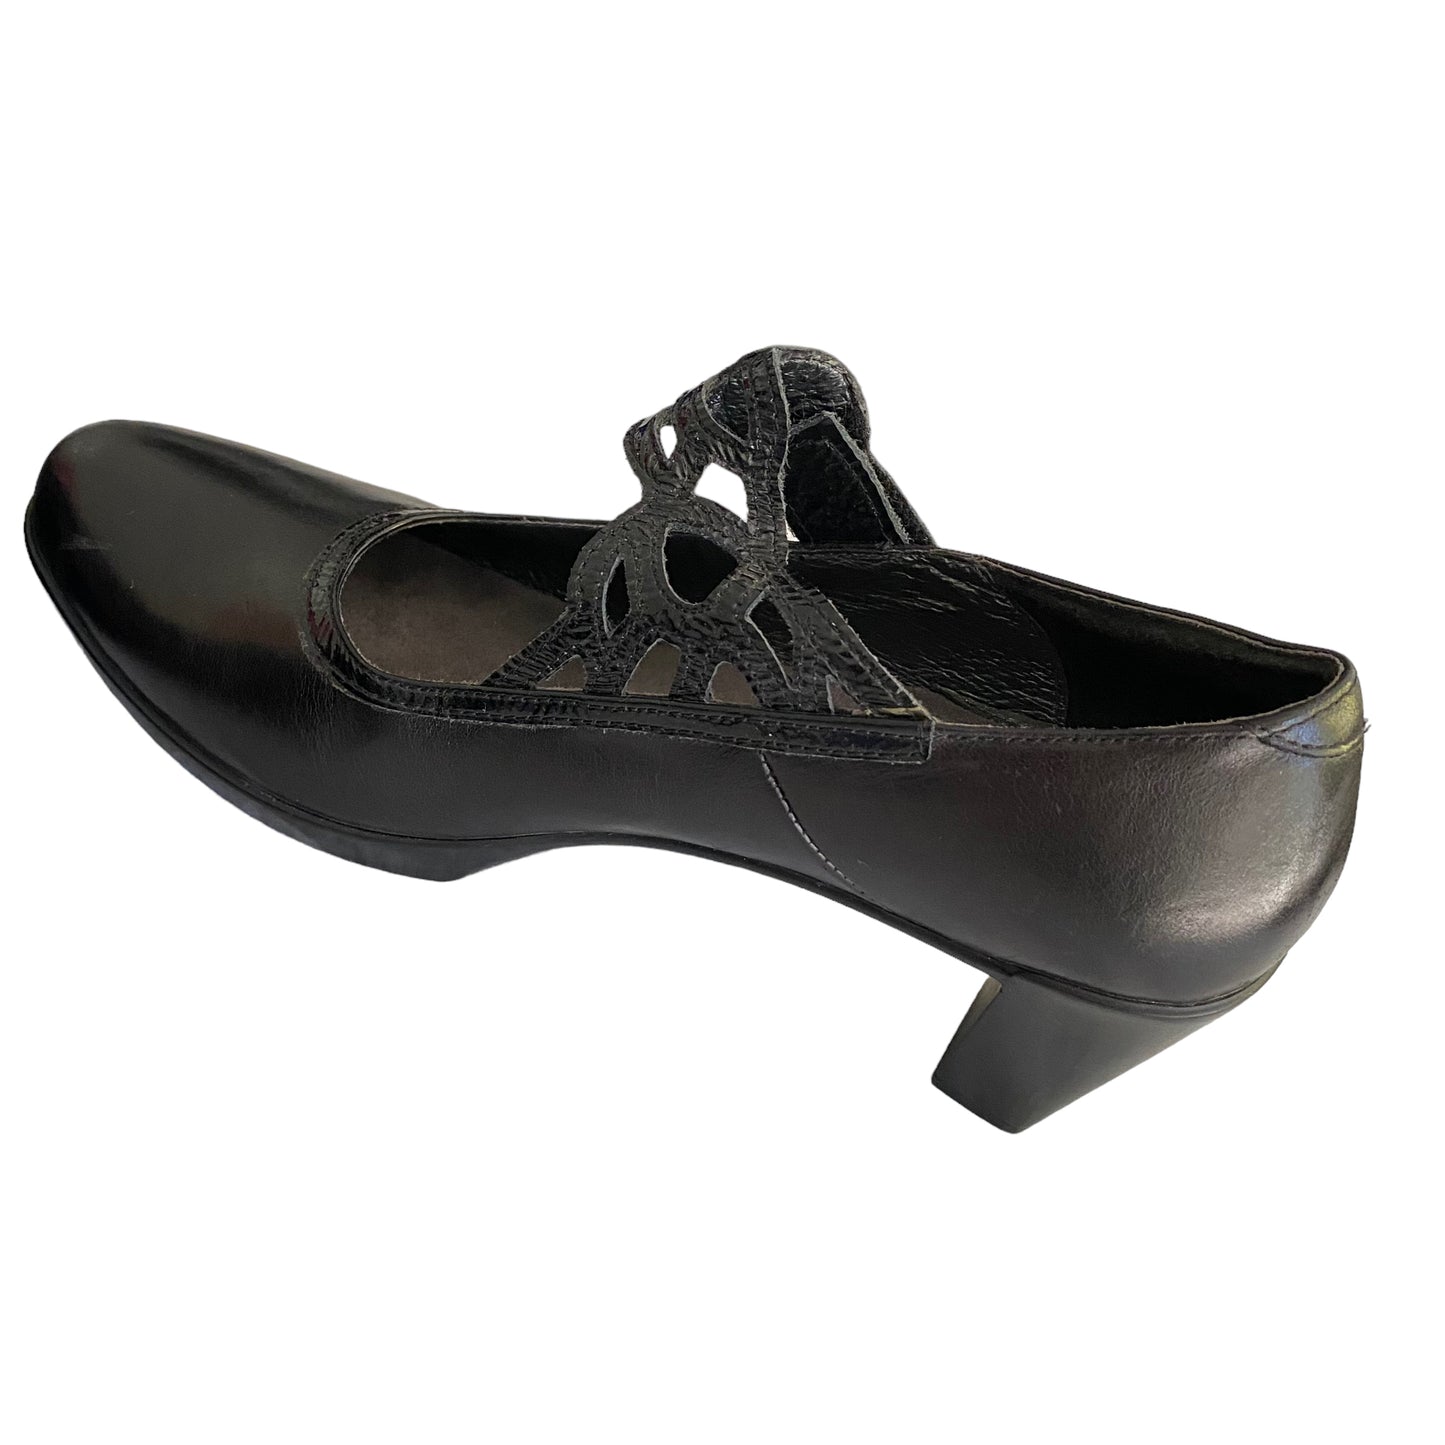 Naot Black Leather Mary Jane Shoes Size 9.5